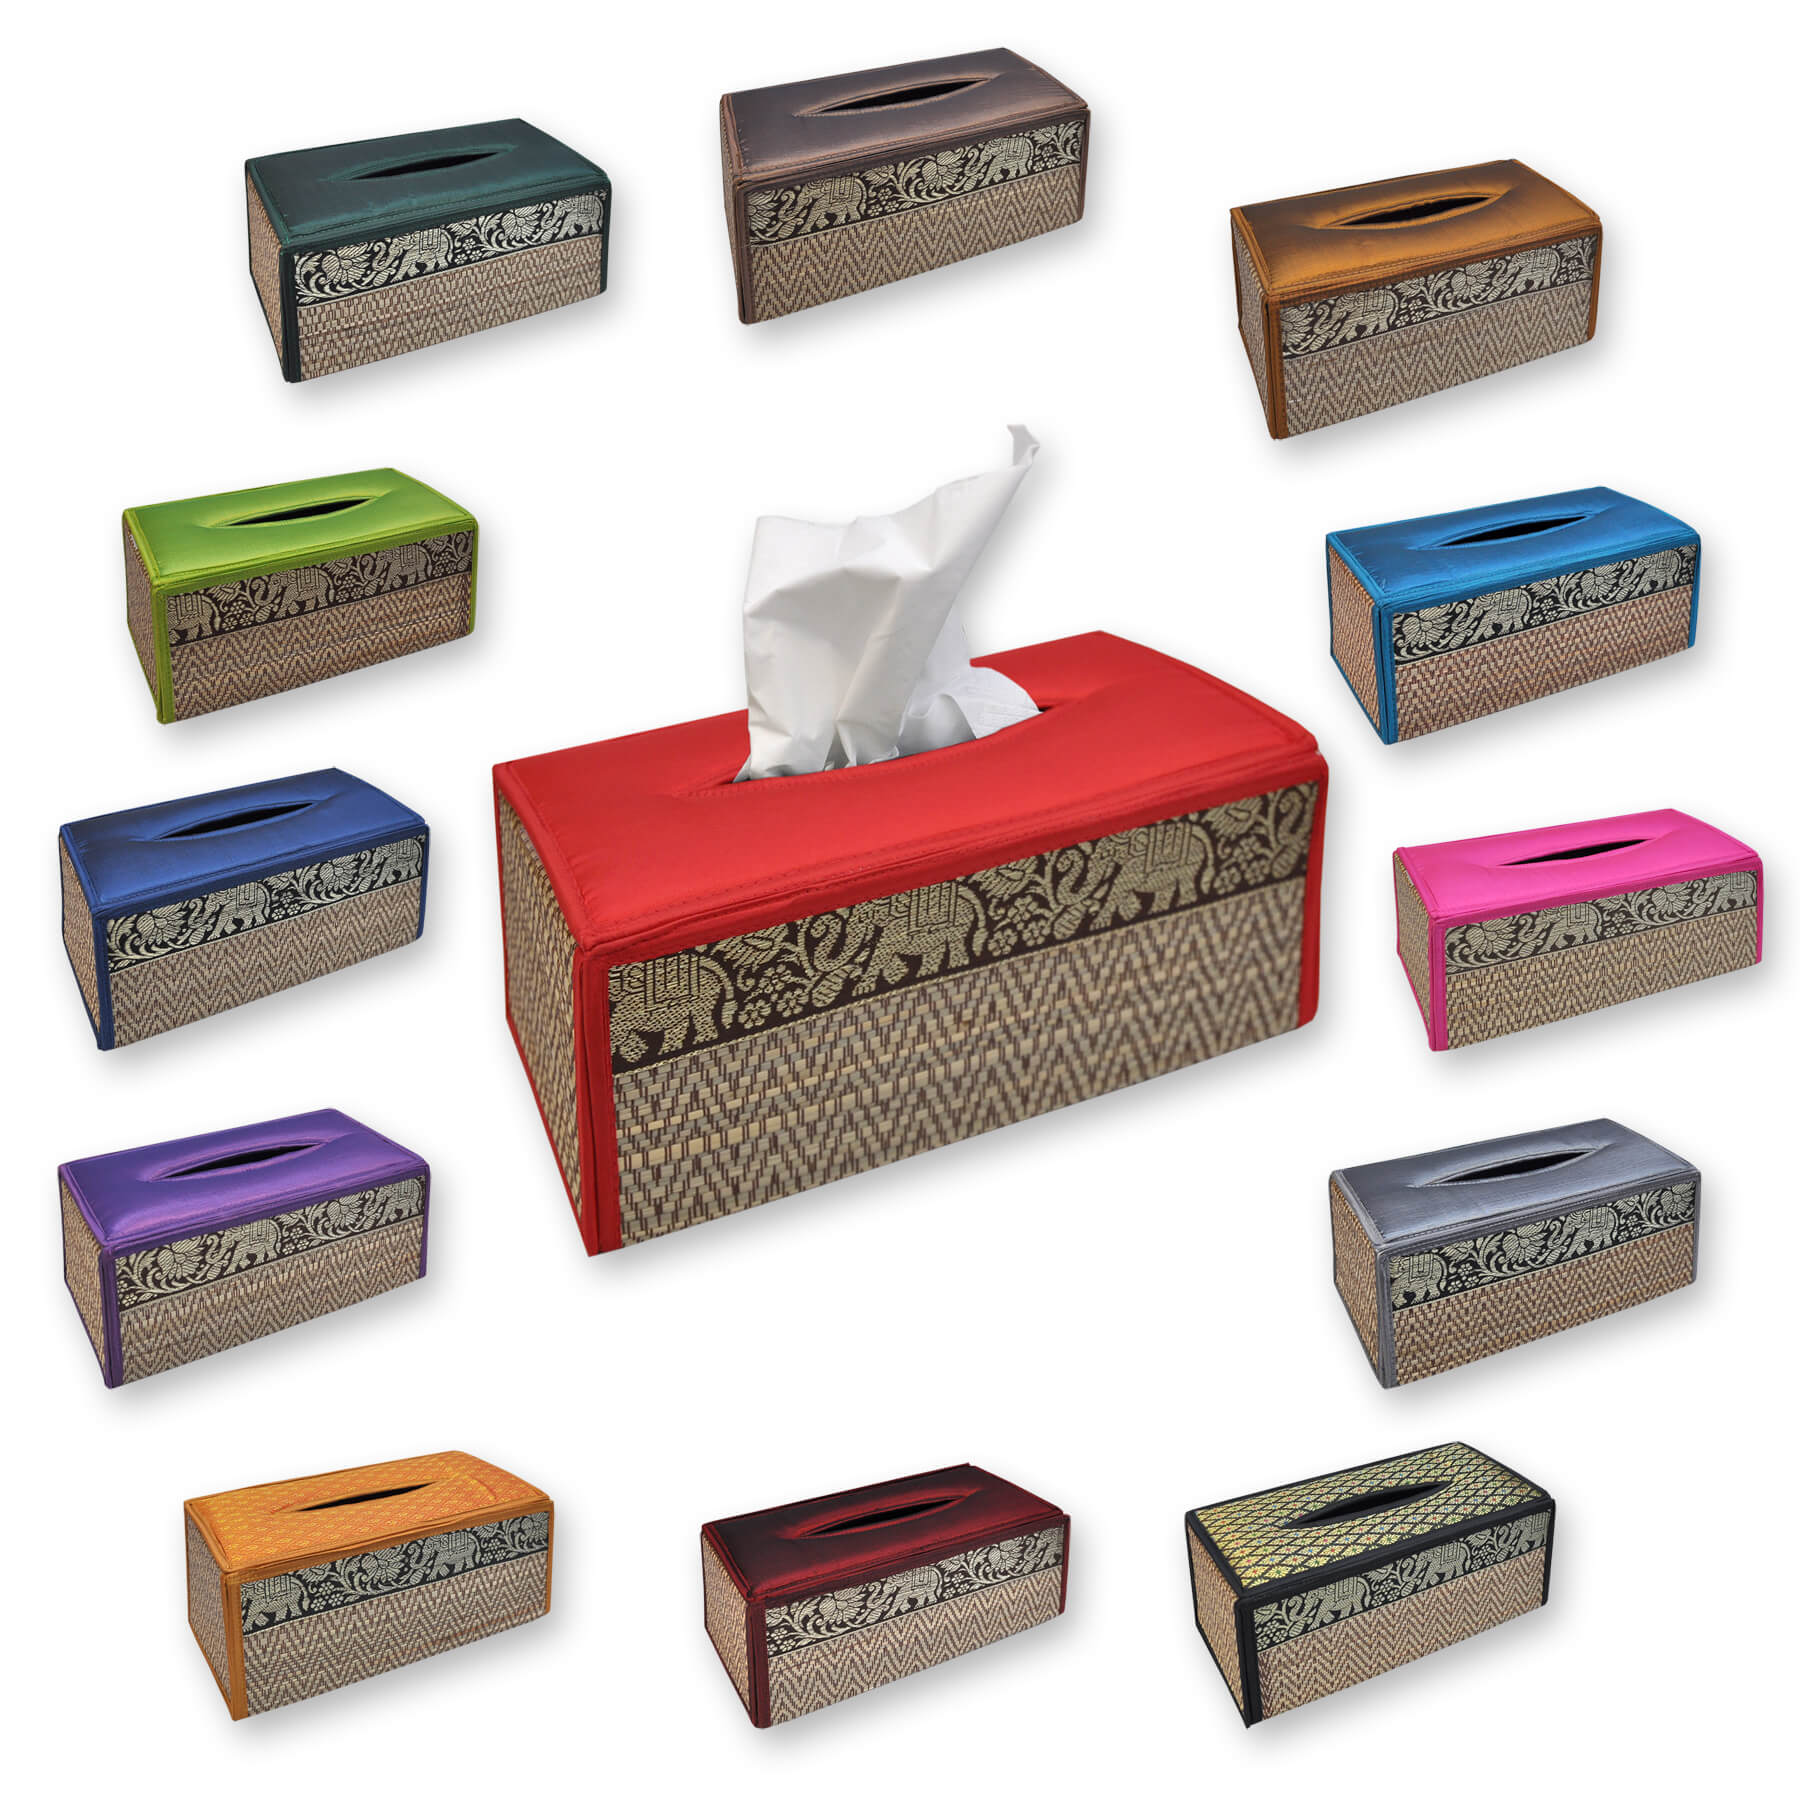 Cosmetic tissue box